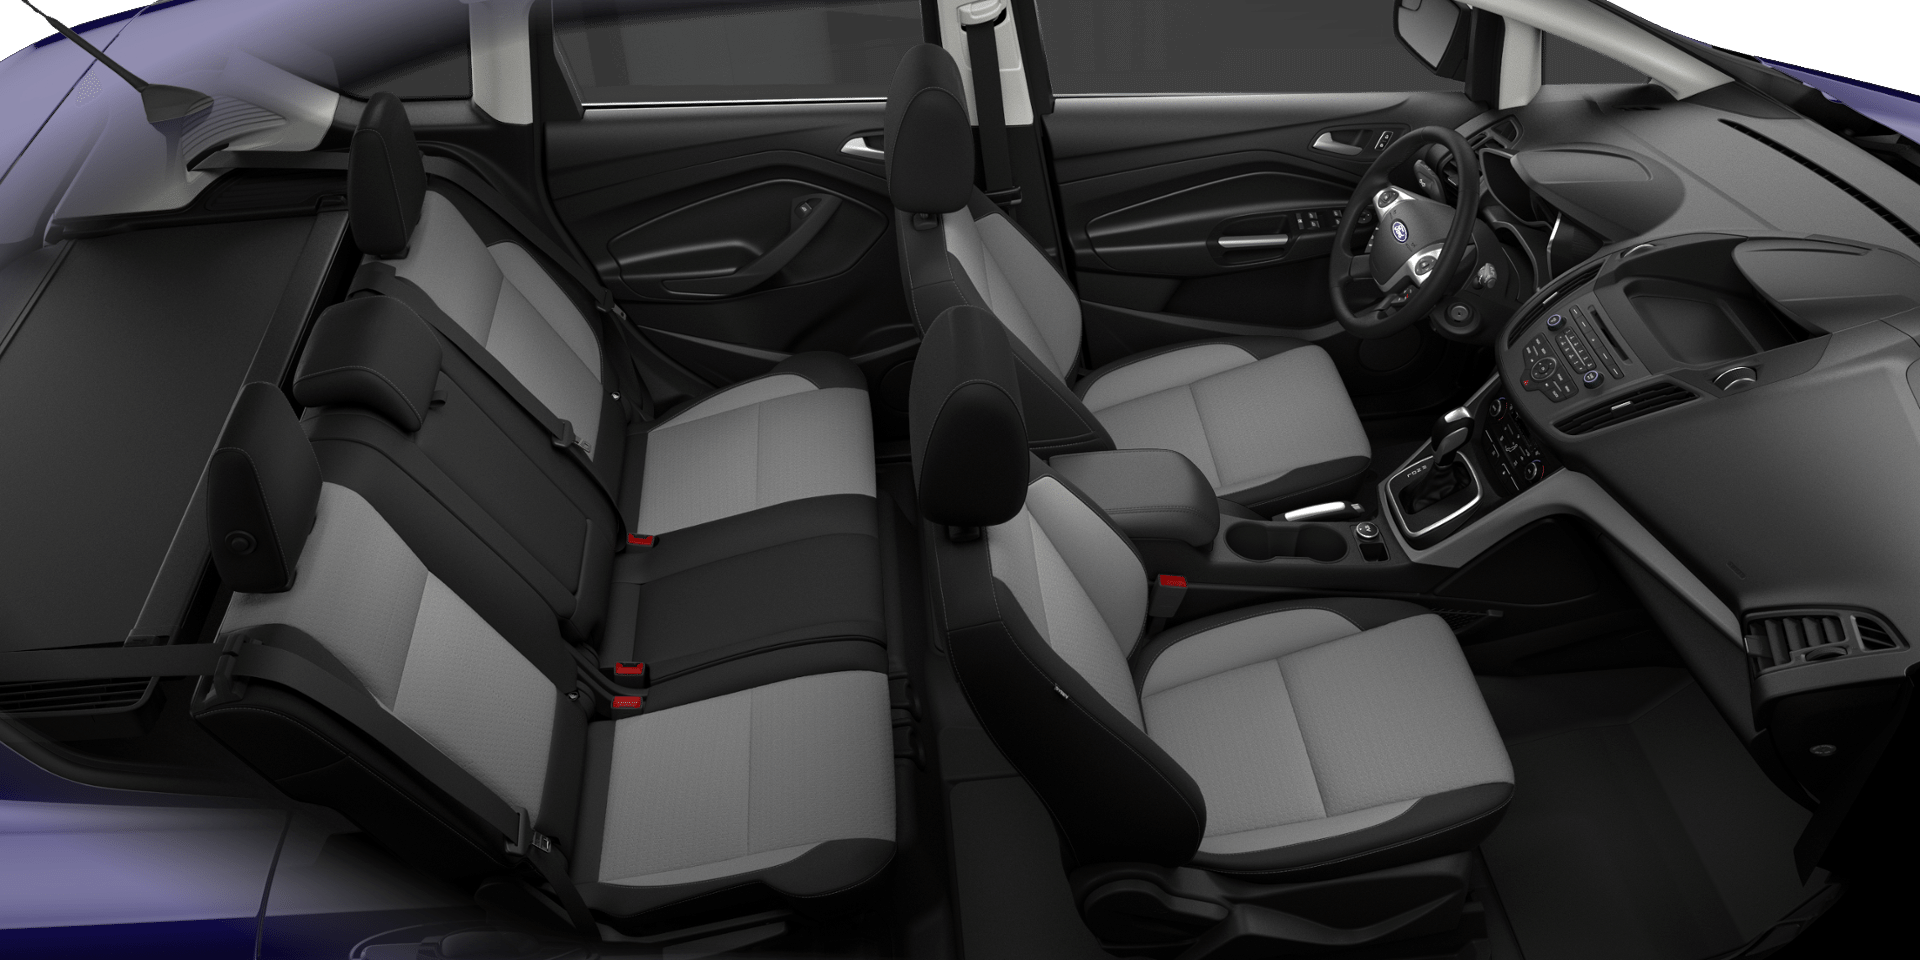 Ford C max Hybrid SE interior seat top view